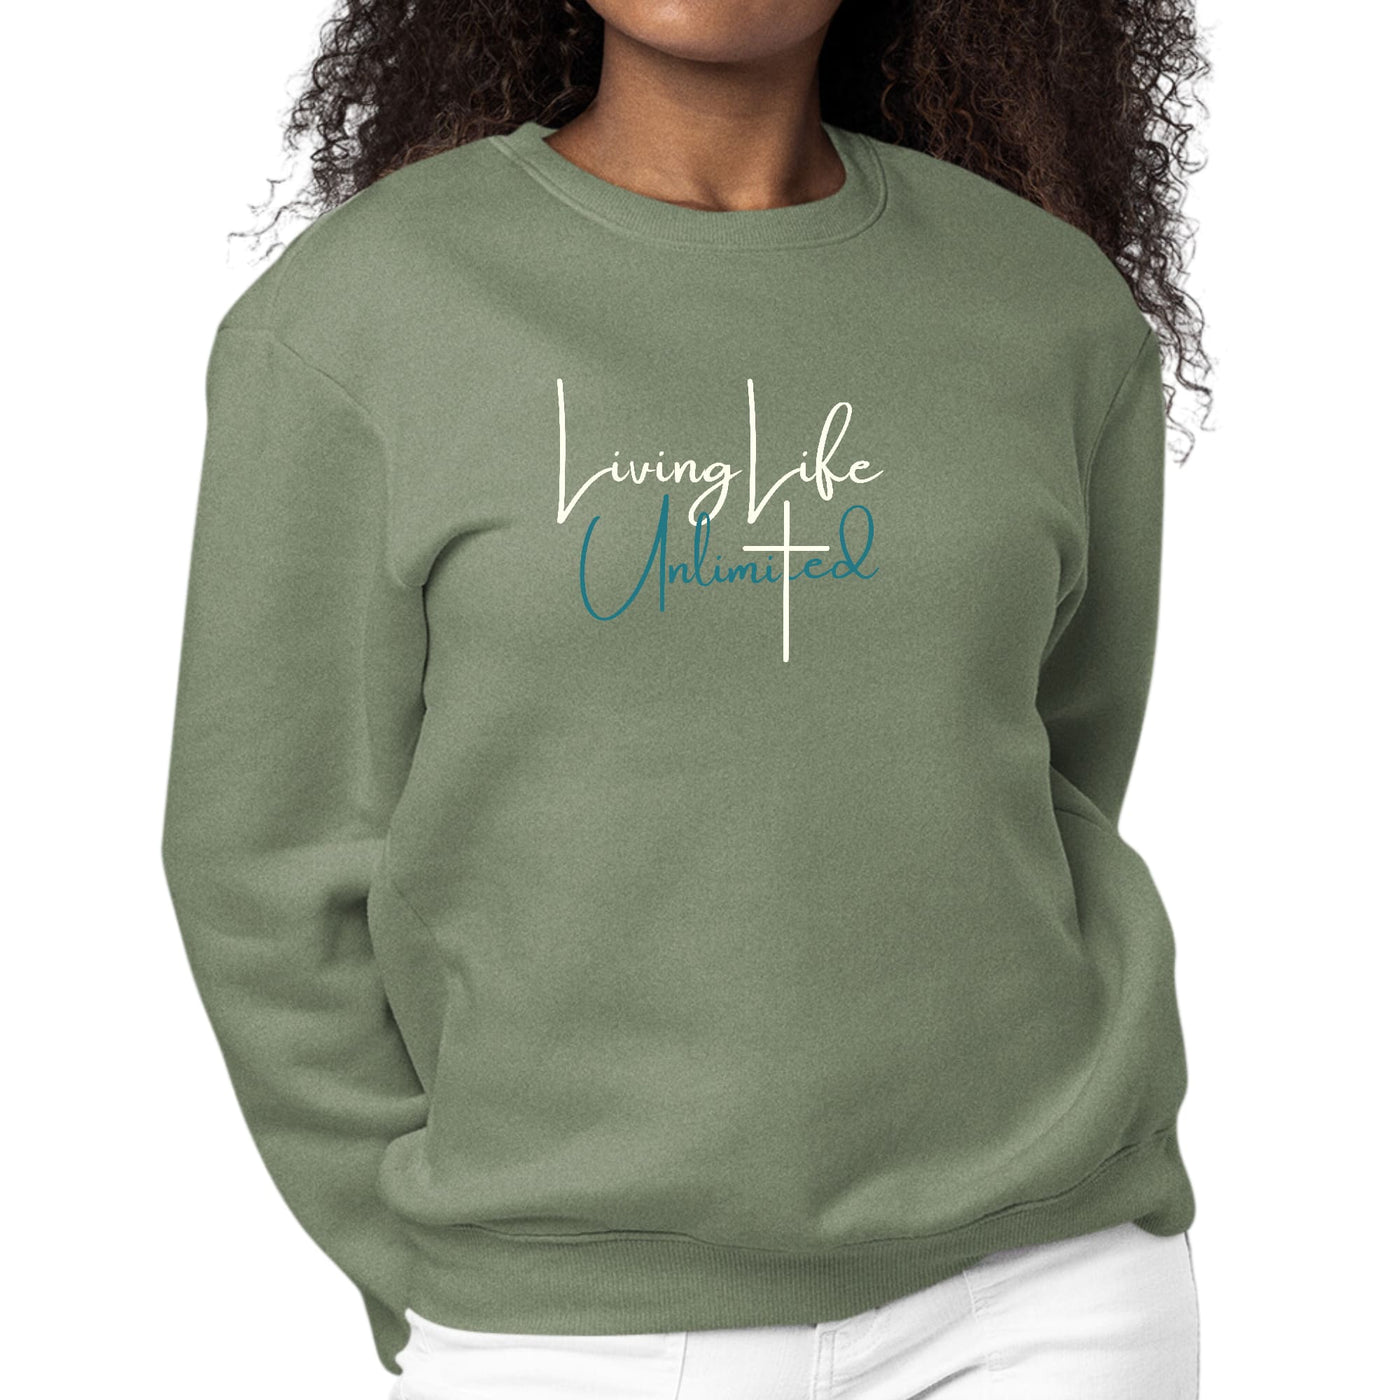 Womens Graphic Sweatshirt Living Life Unlimited - Womens | Sweatshirts